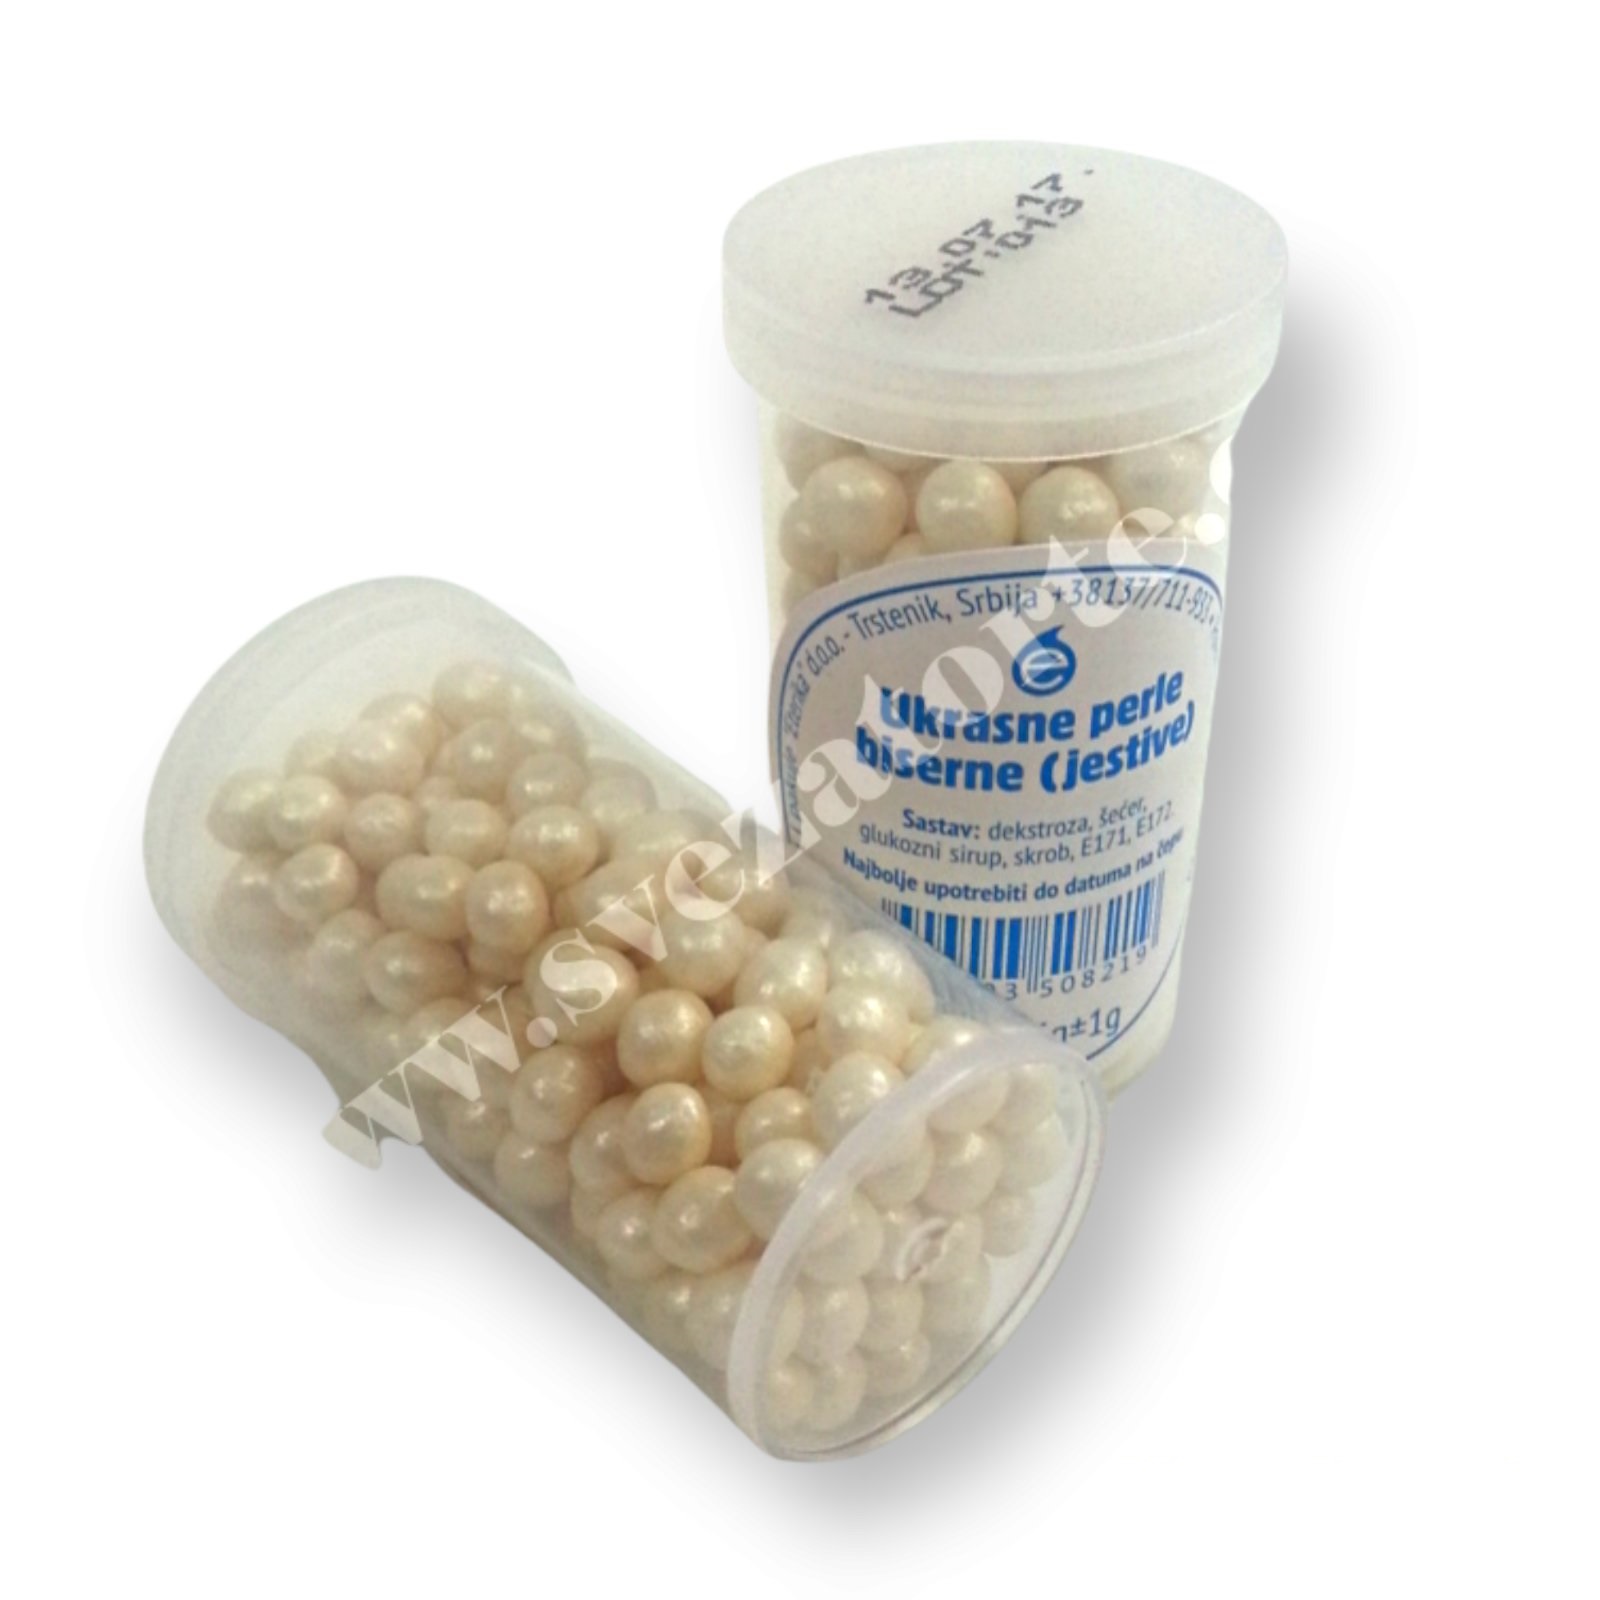 Šećerne dekorativne jestive perle - Biserne